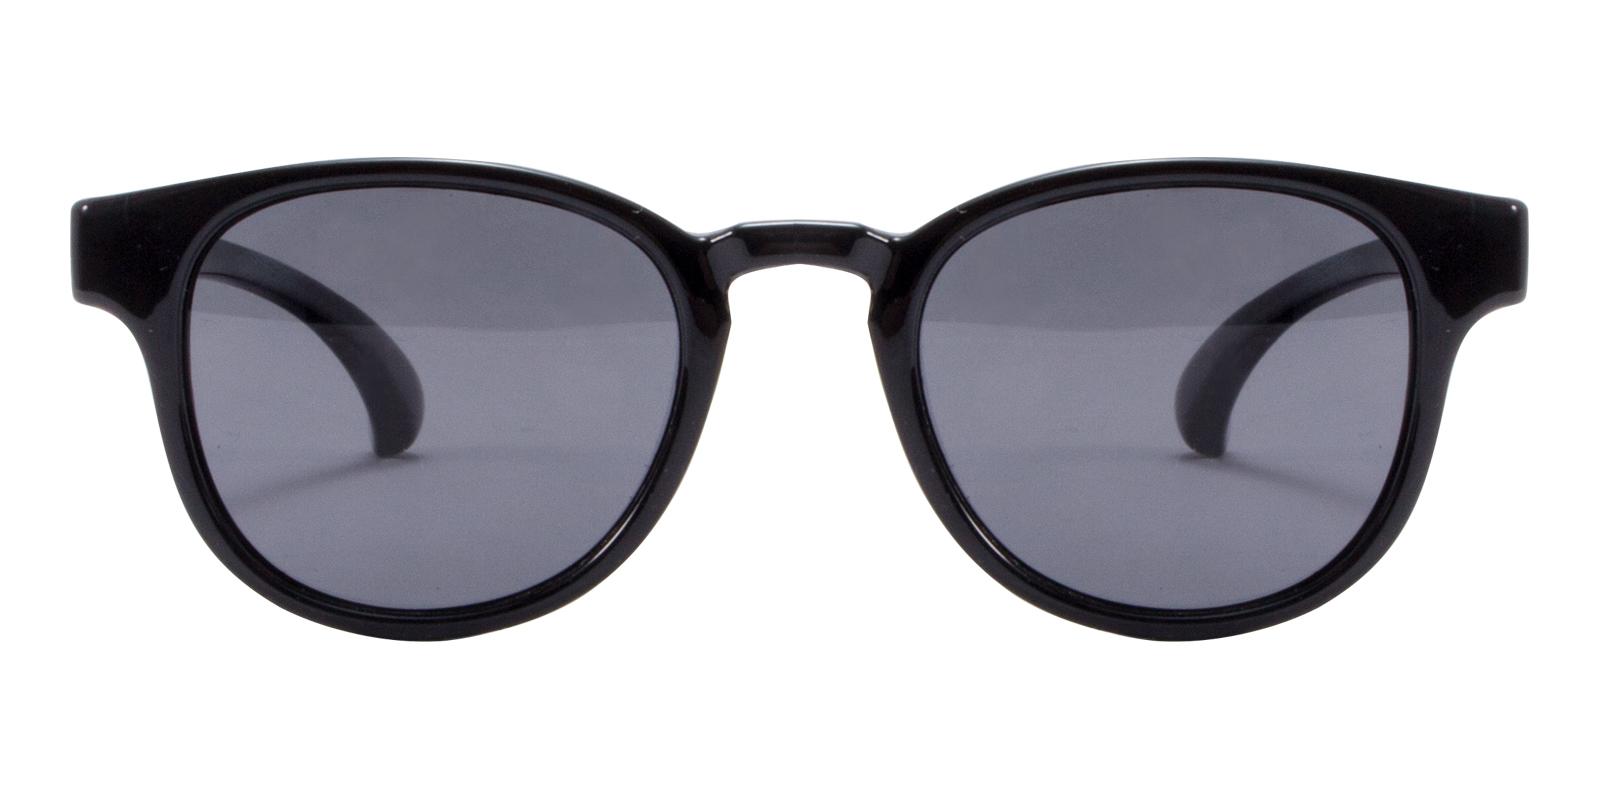 Umbriel Black TR Sunglasses Frames from ABBE Glasses